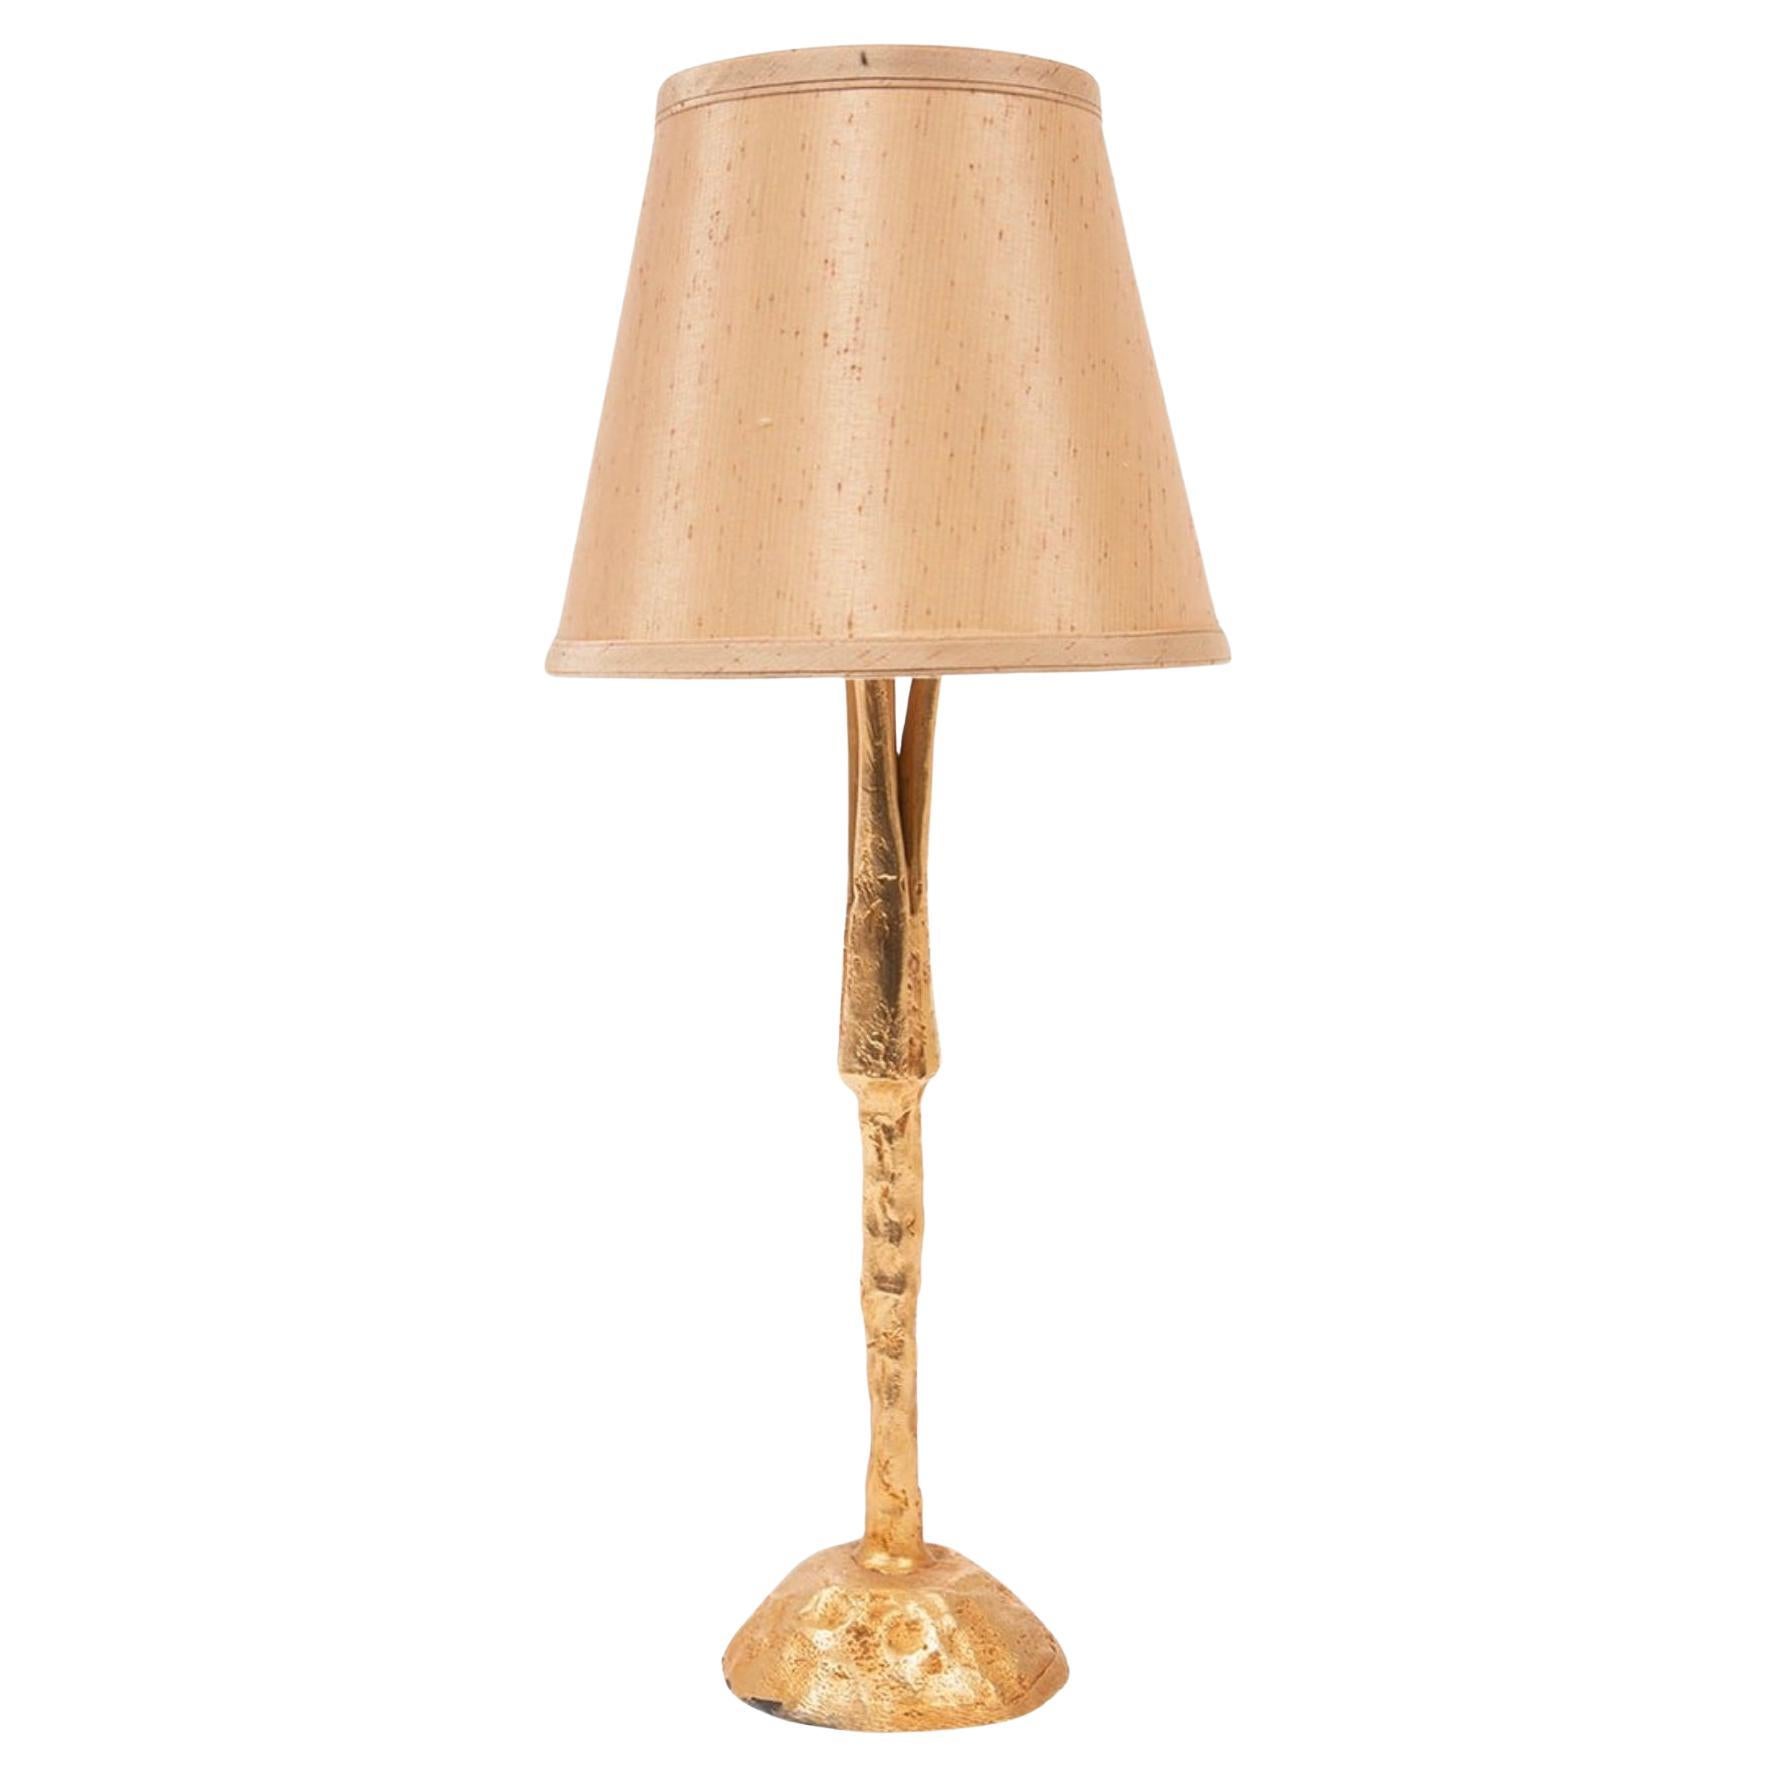 Pierre Casenove for Fondica France Gilt Metal Table Lamp